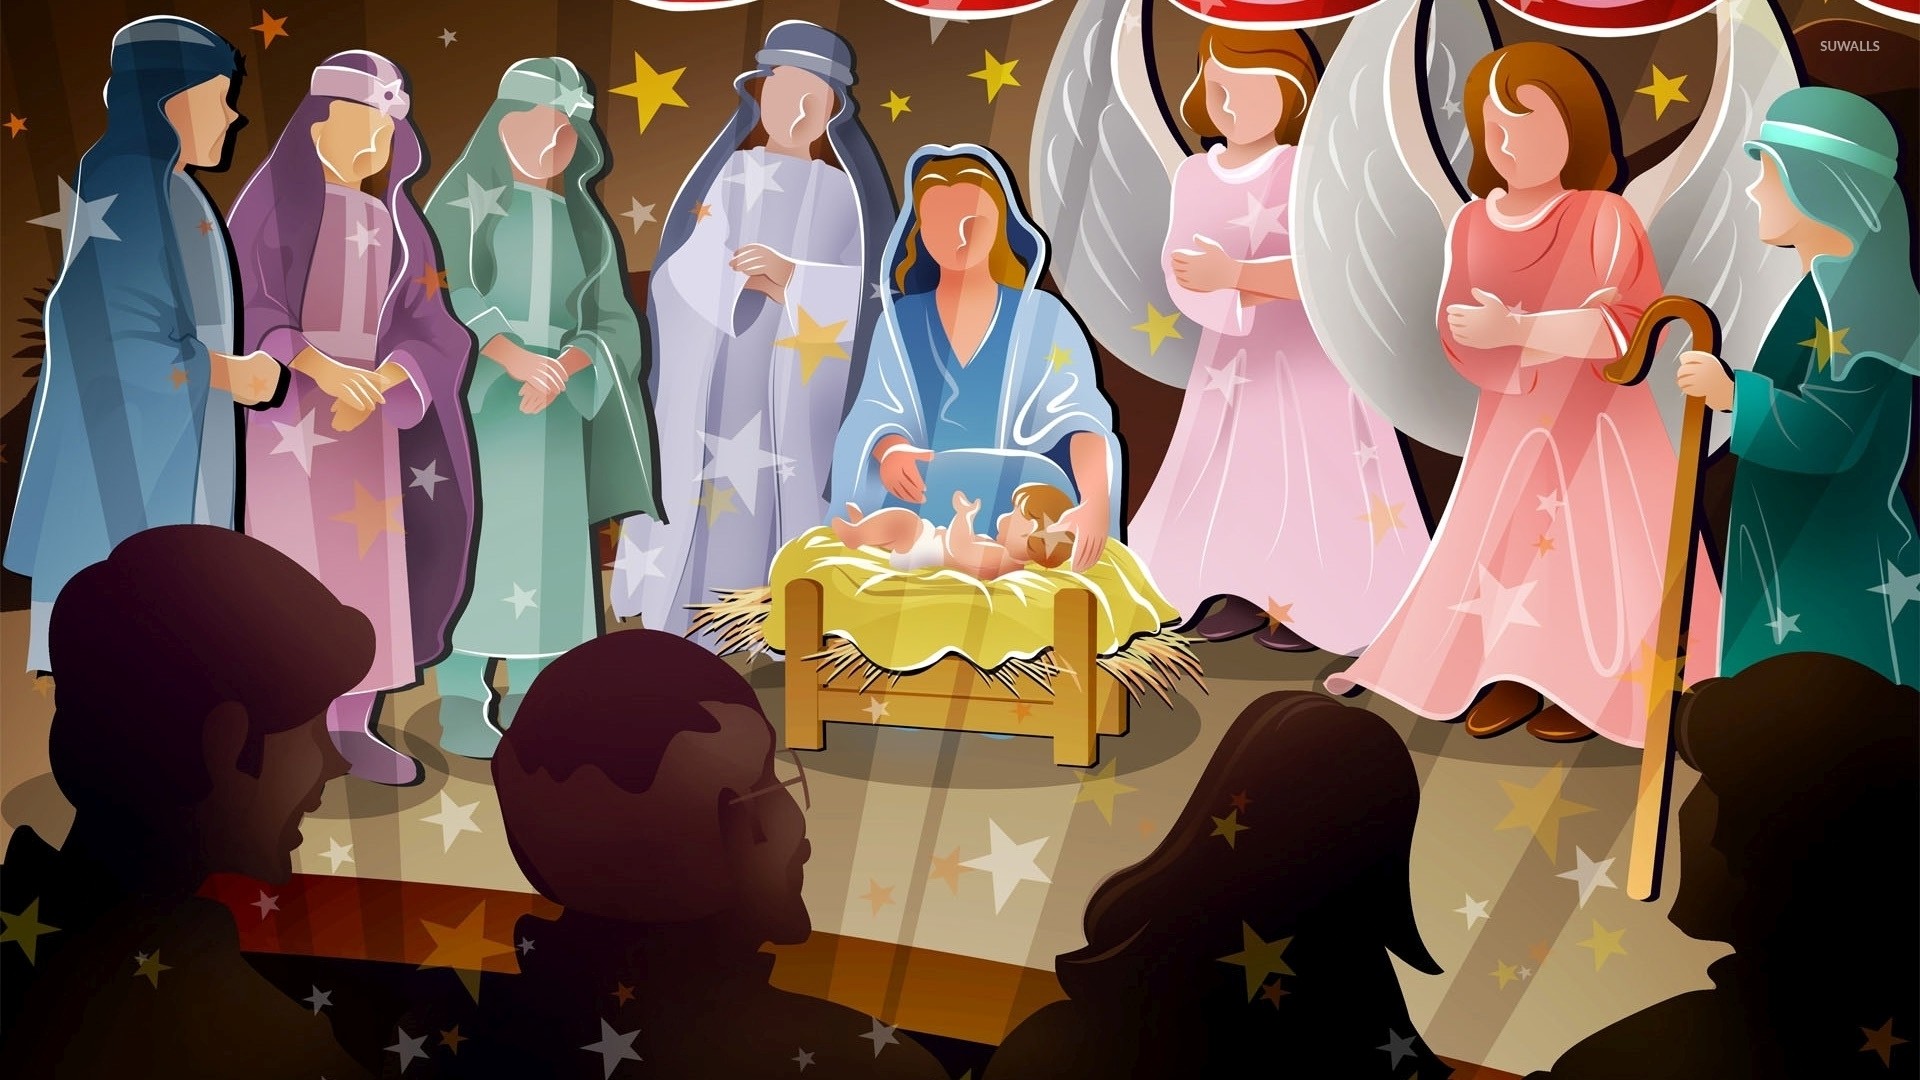 Nativity scene 2 wallpaper